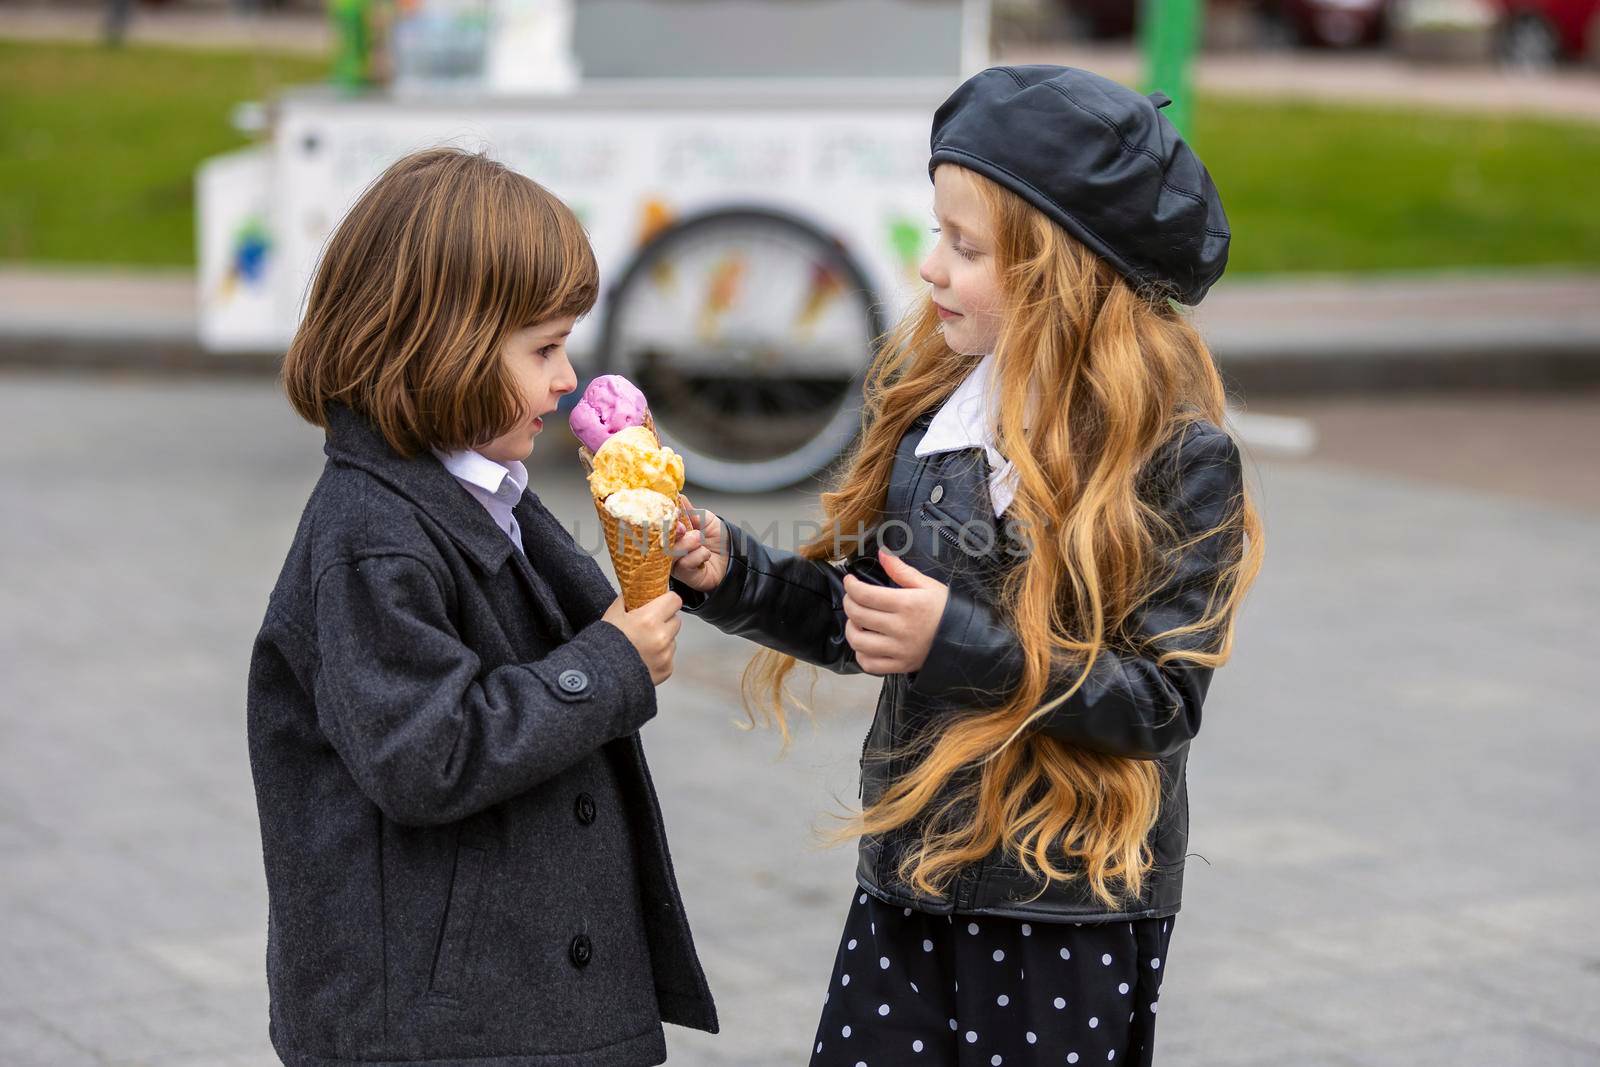 Children eating ice cream by zokov